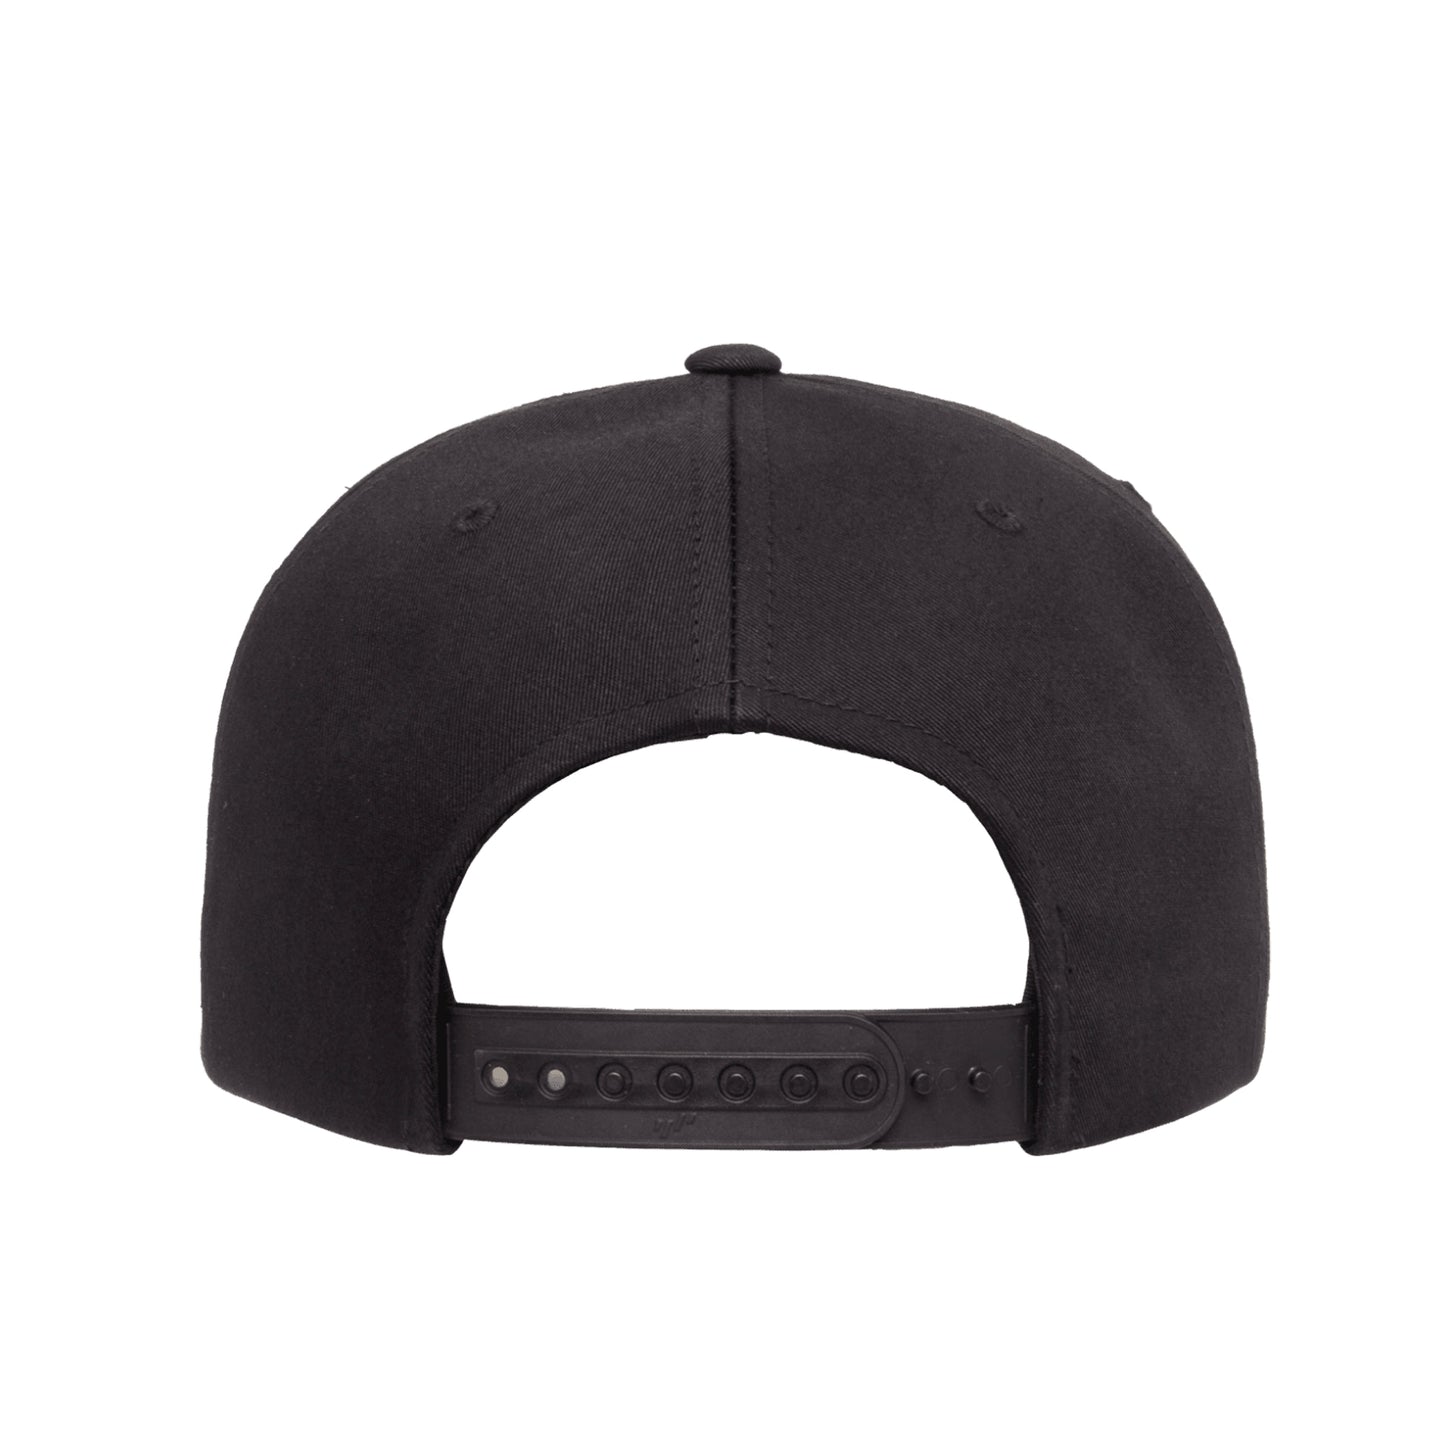 Death Metal Logo Snapback Hat Black